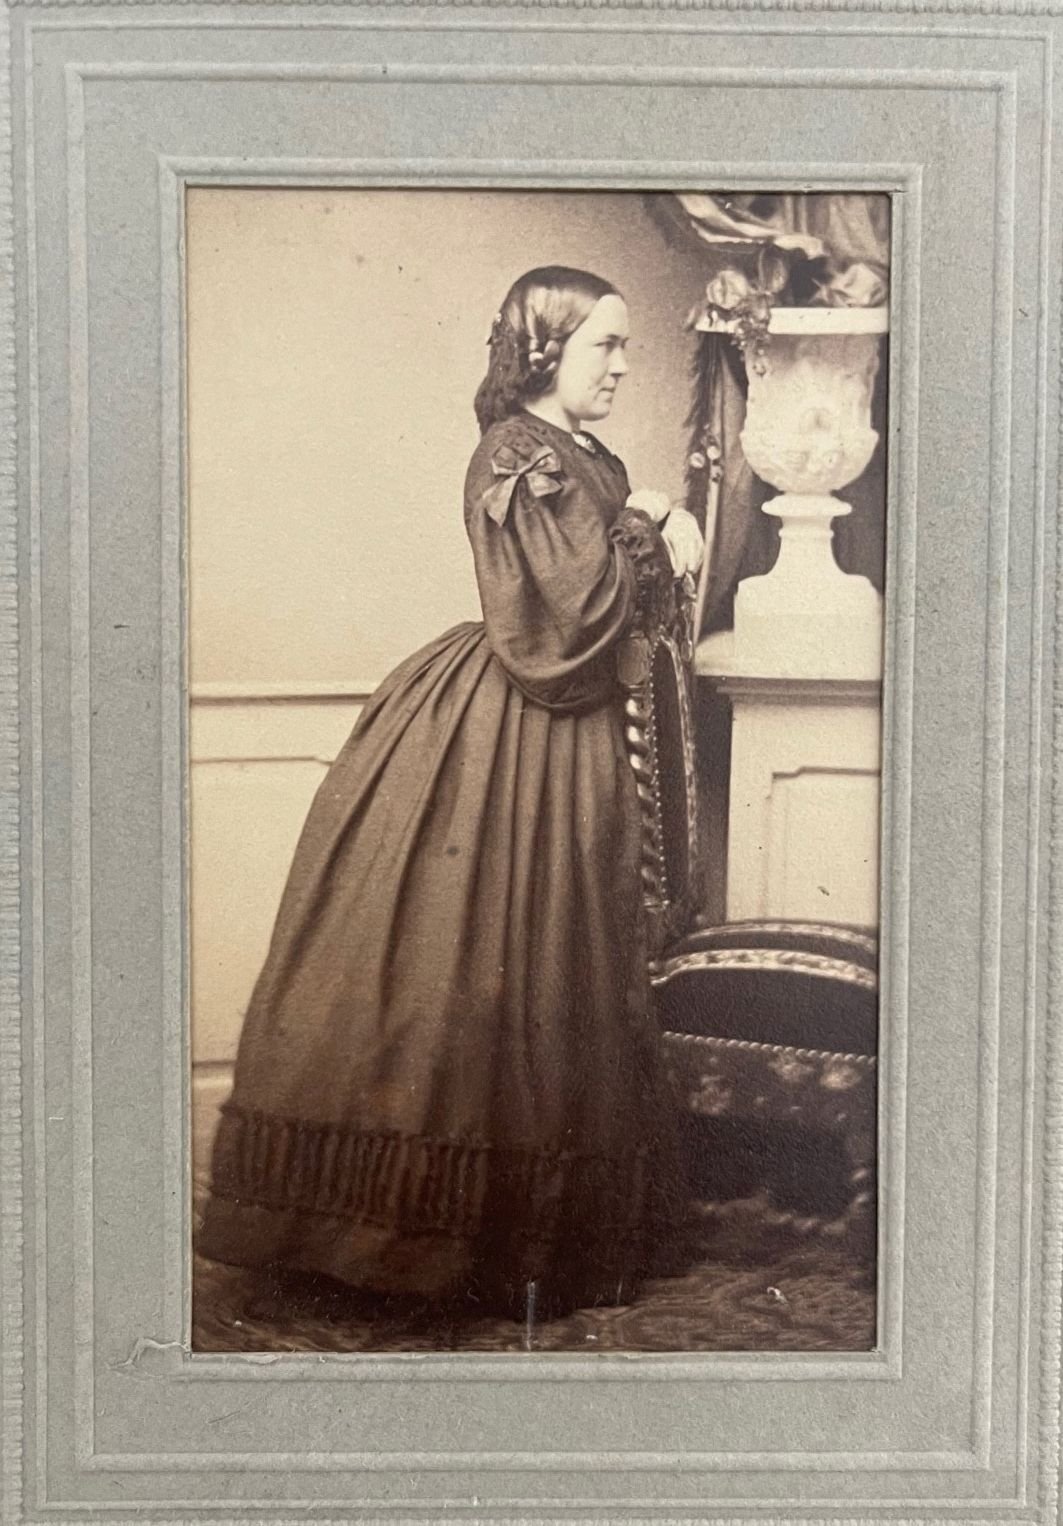 Fotografie, P. Weisbrod, Agnes, Gräfin zu Solms-Rödelheim, ca. 1865. (Taunus-Rhein-Main - Regionalgeschichtliche Sammlung Dr. Stefan Naas CC BY-NC-SA)